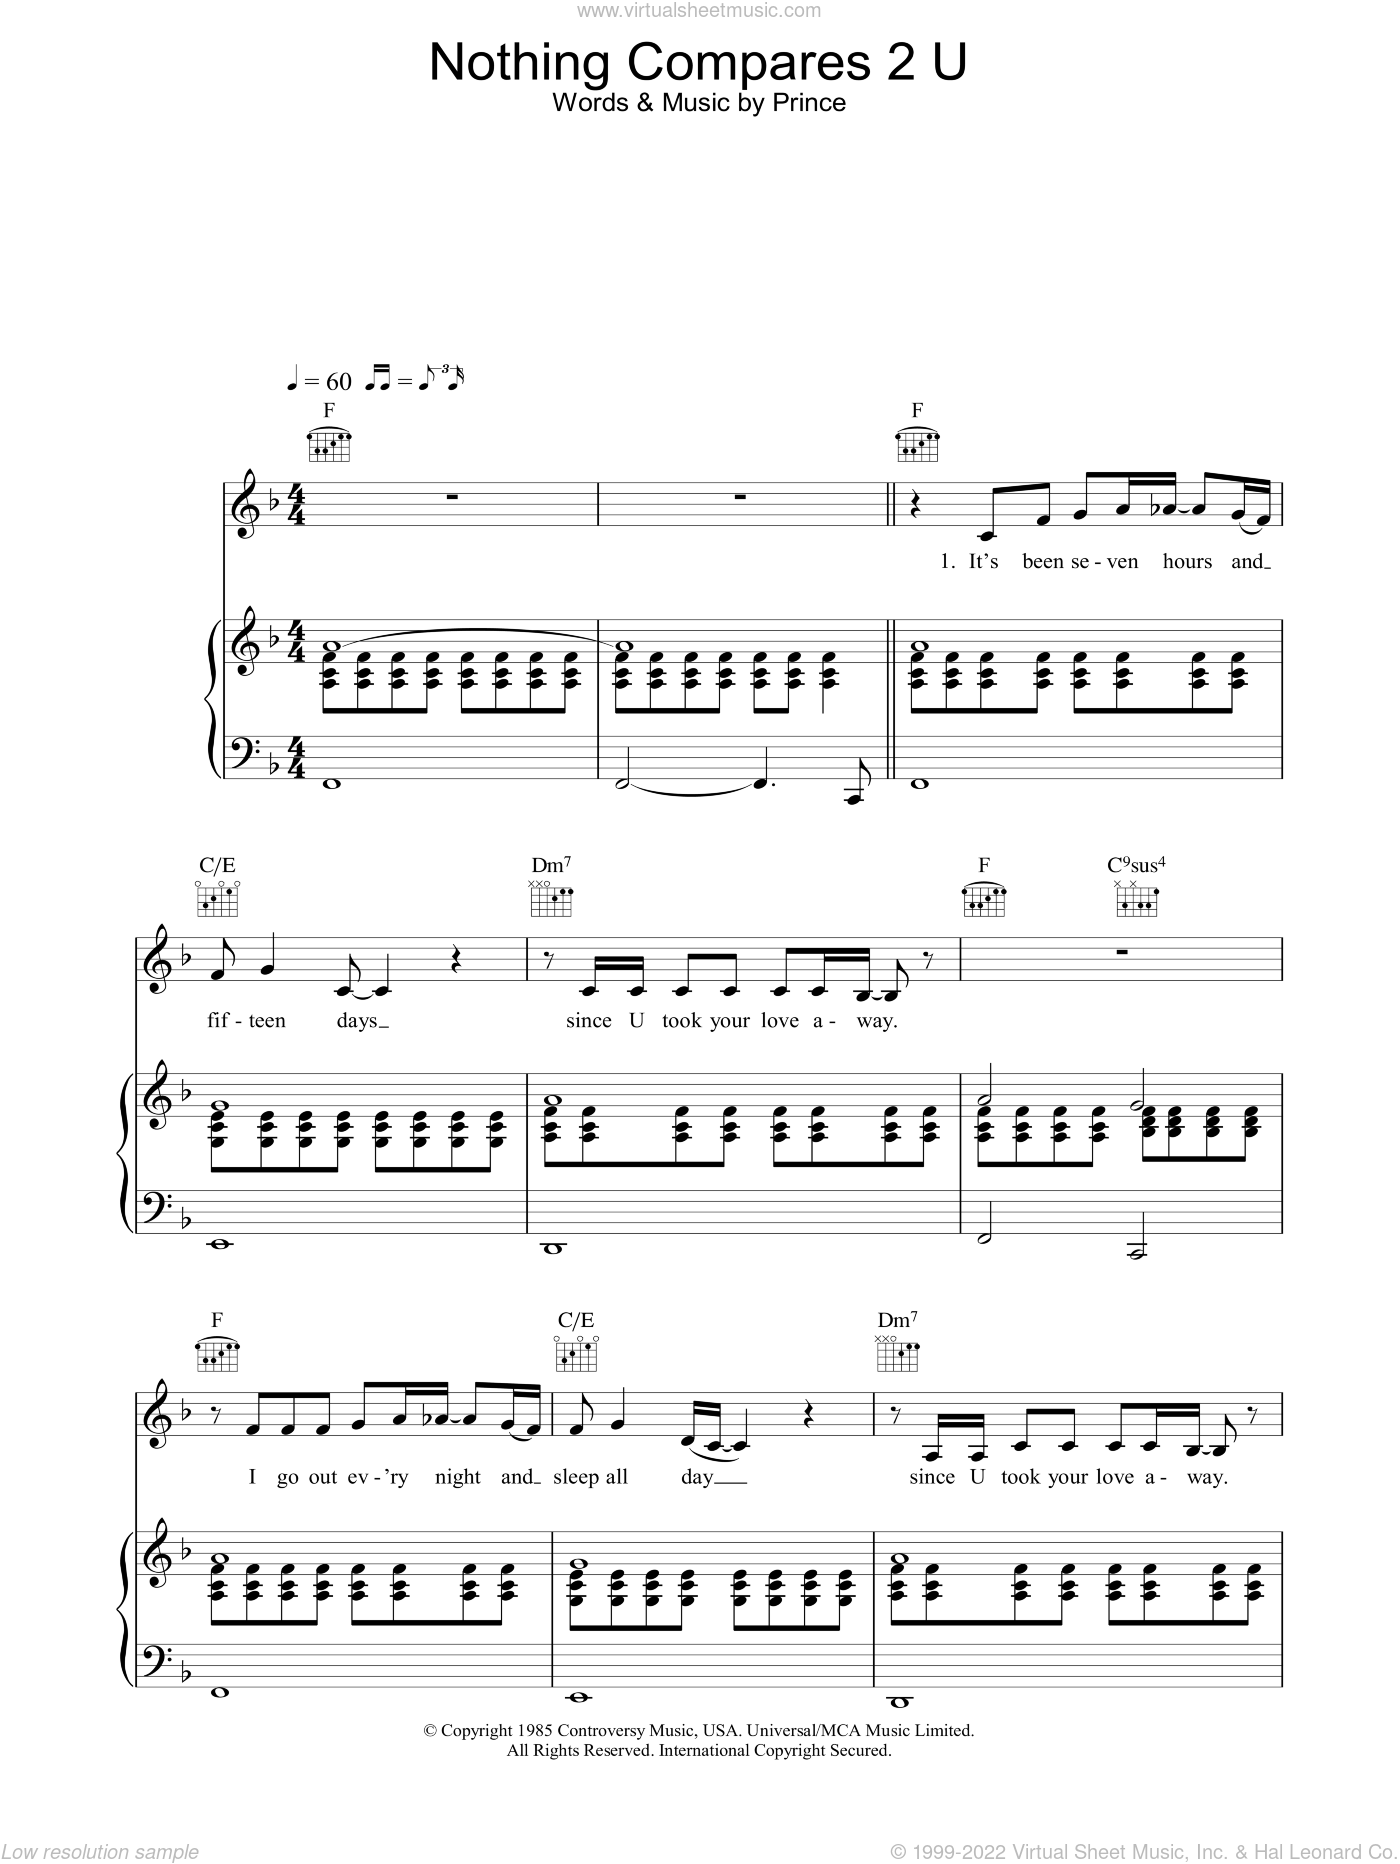 Alone Again (Naturally) sheet music for guitar (chords) v2